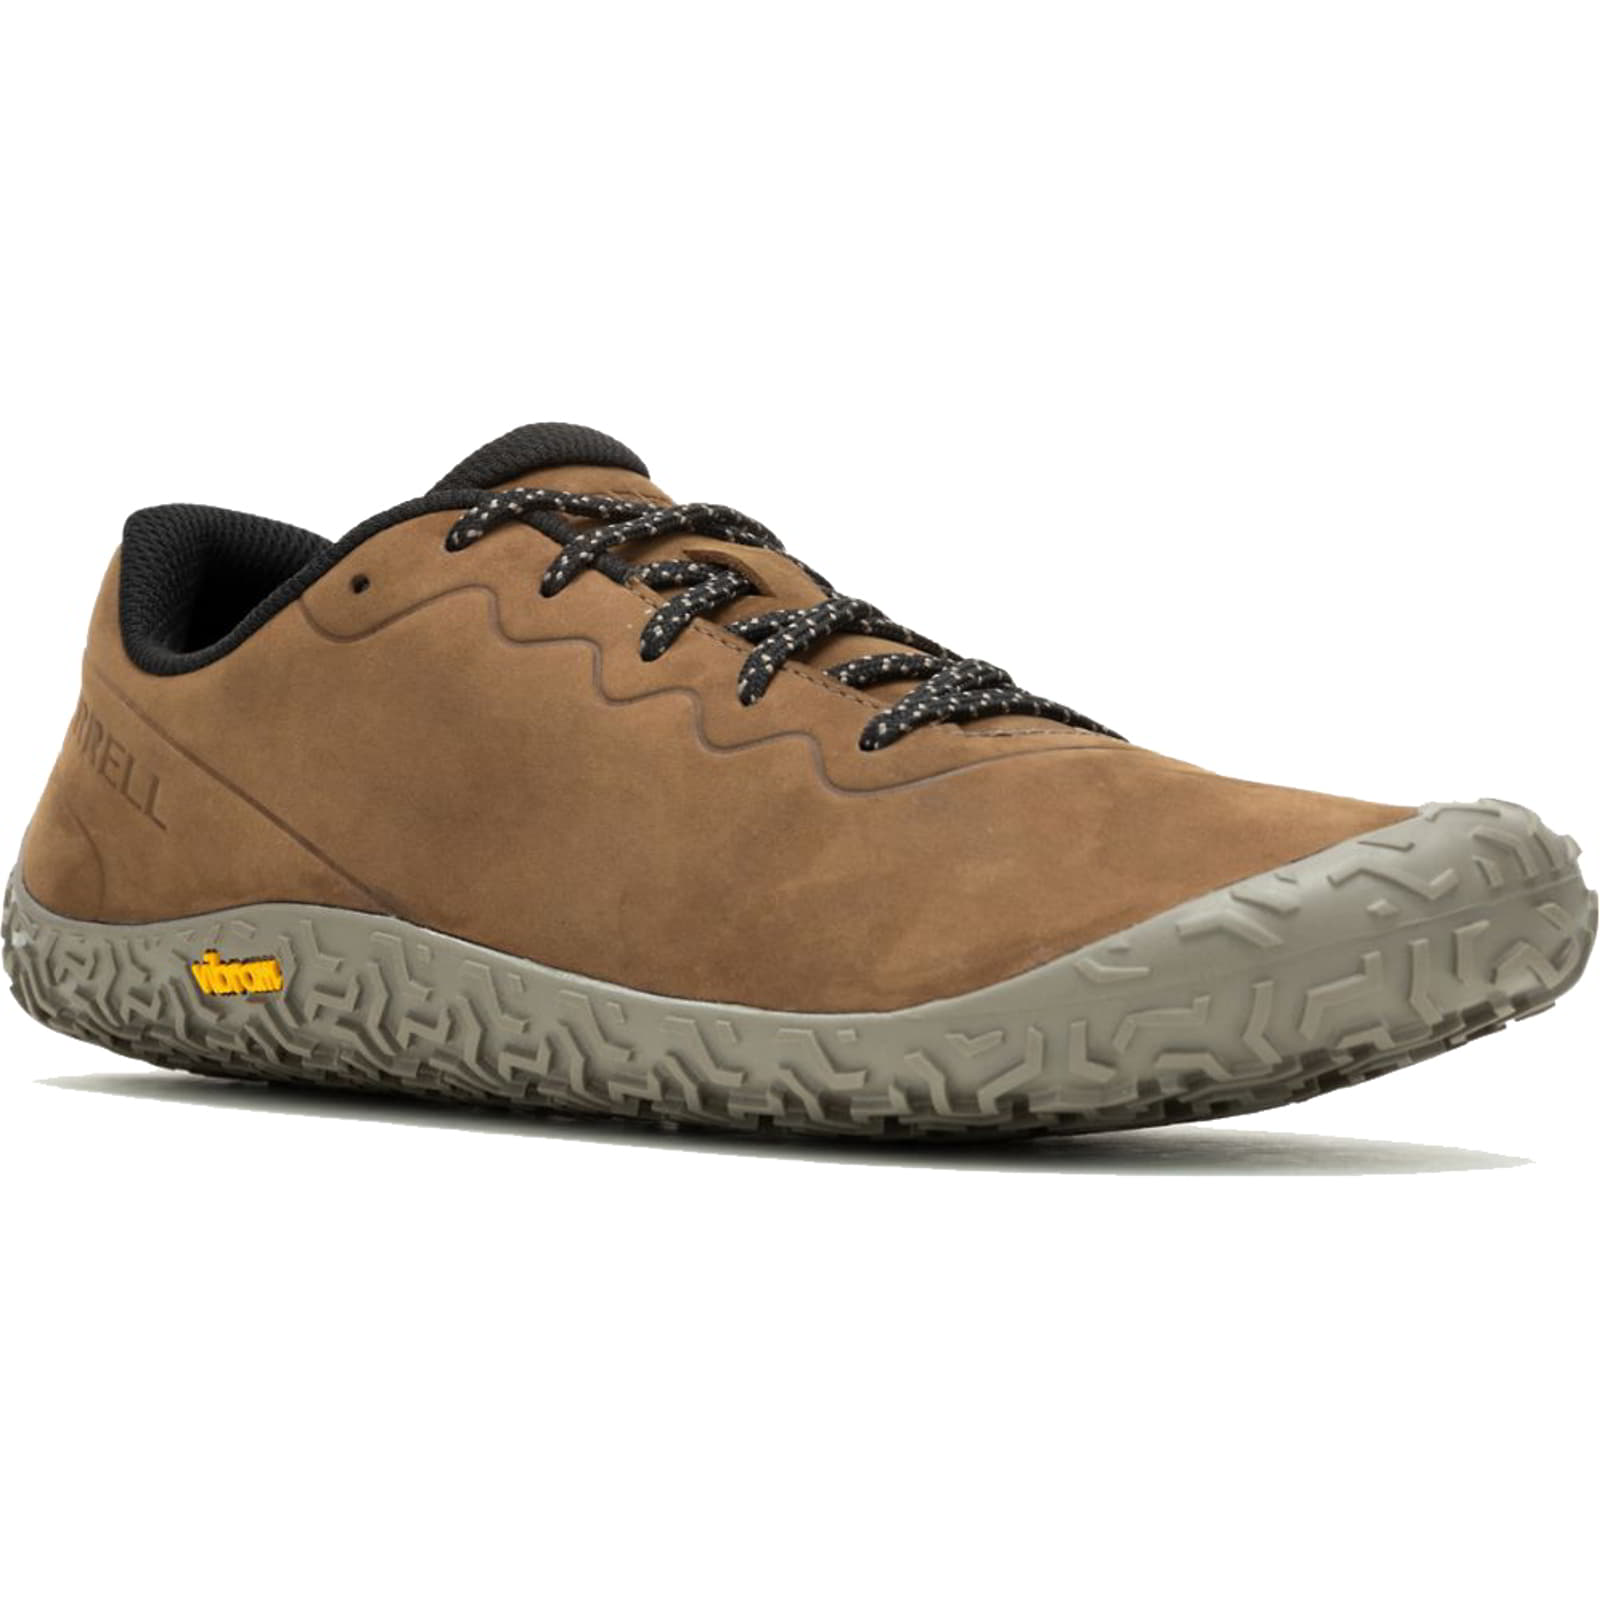 Merrell Men's Vapor Glove 6 Leather Barefoot Running Shoes Trainers - UK 8